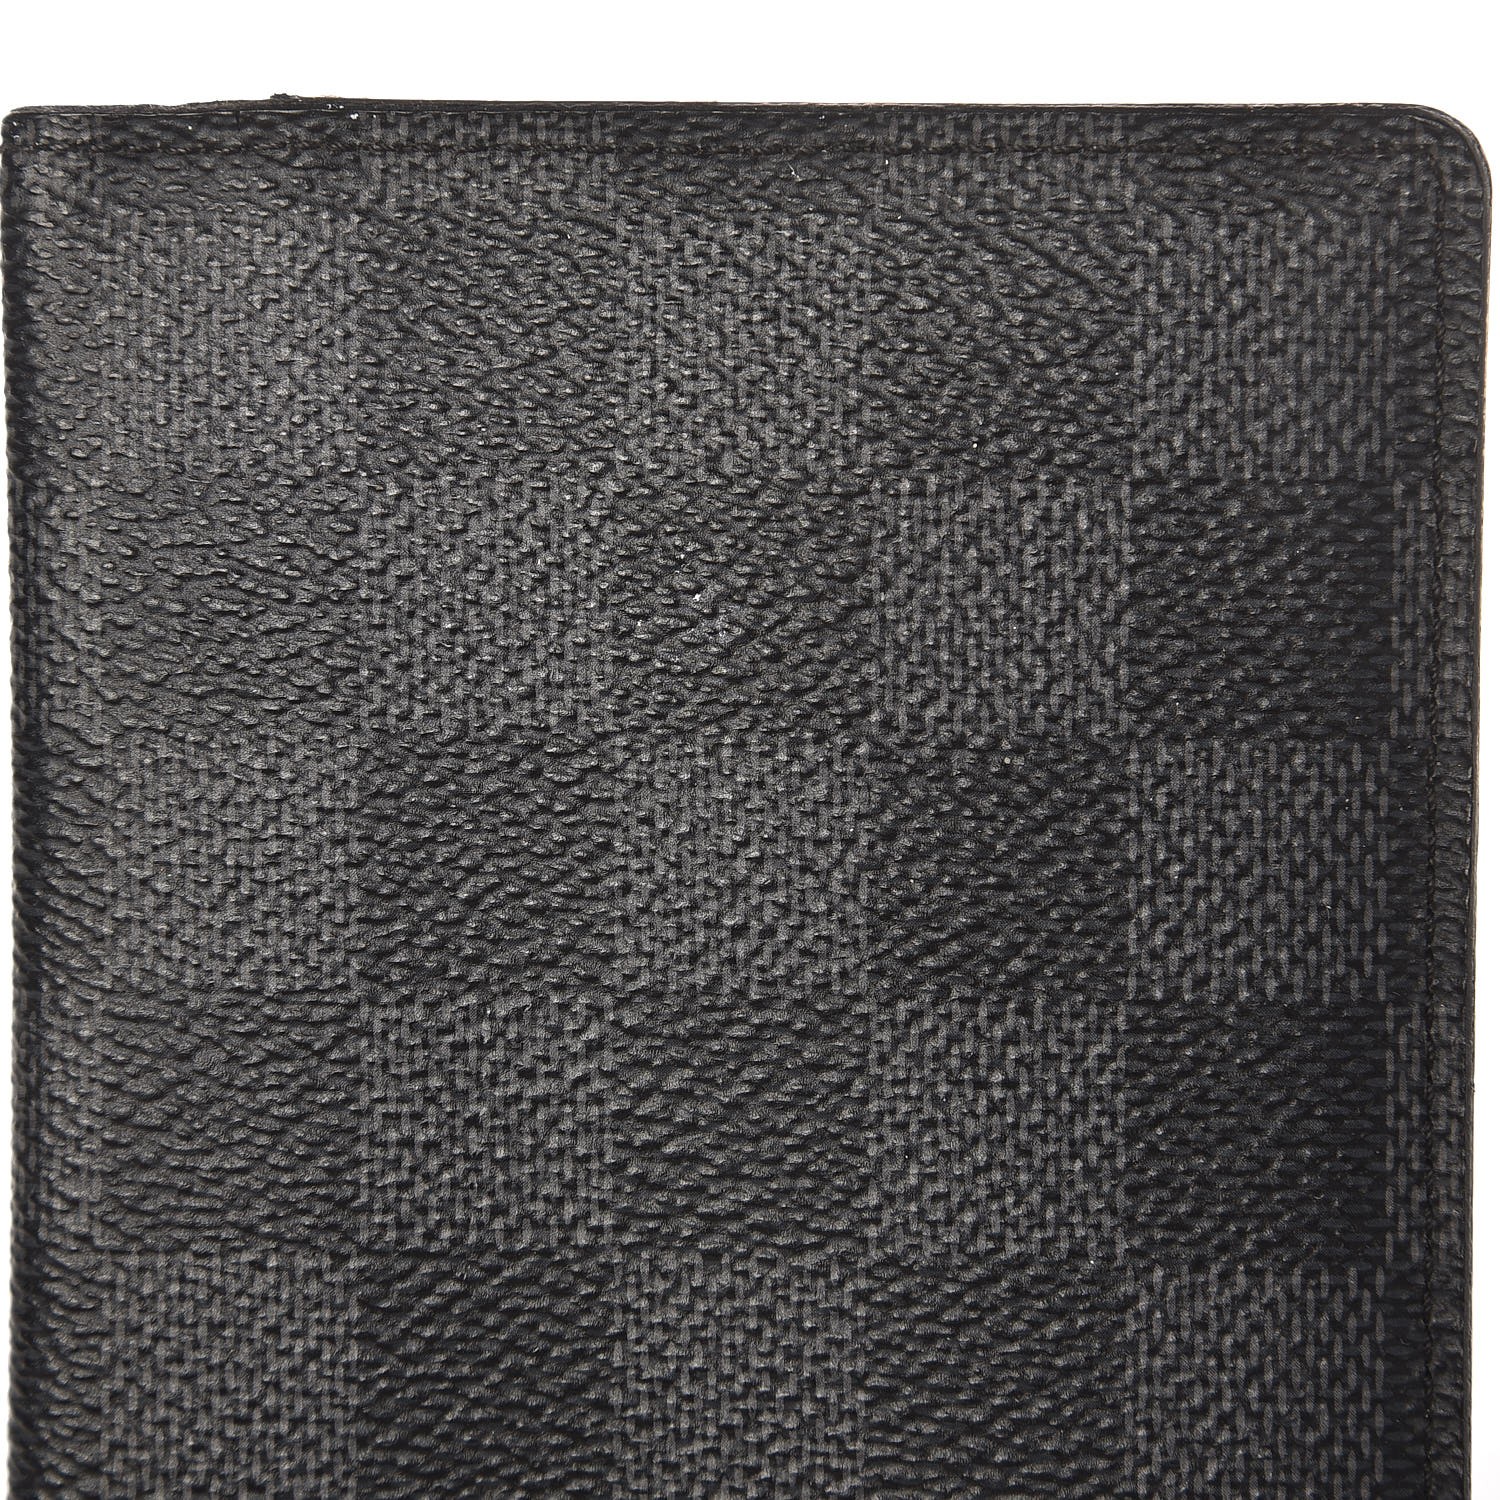 Louis Vuitton Notebook Cover Pmr